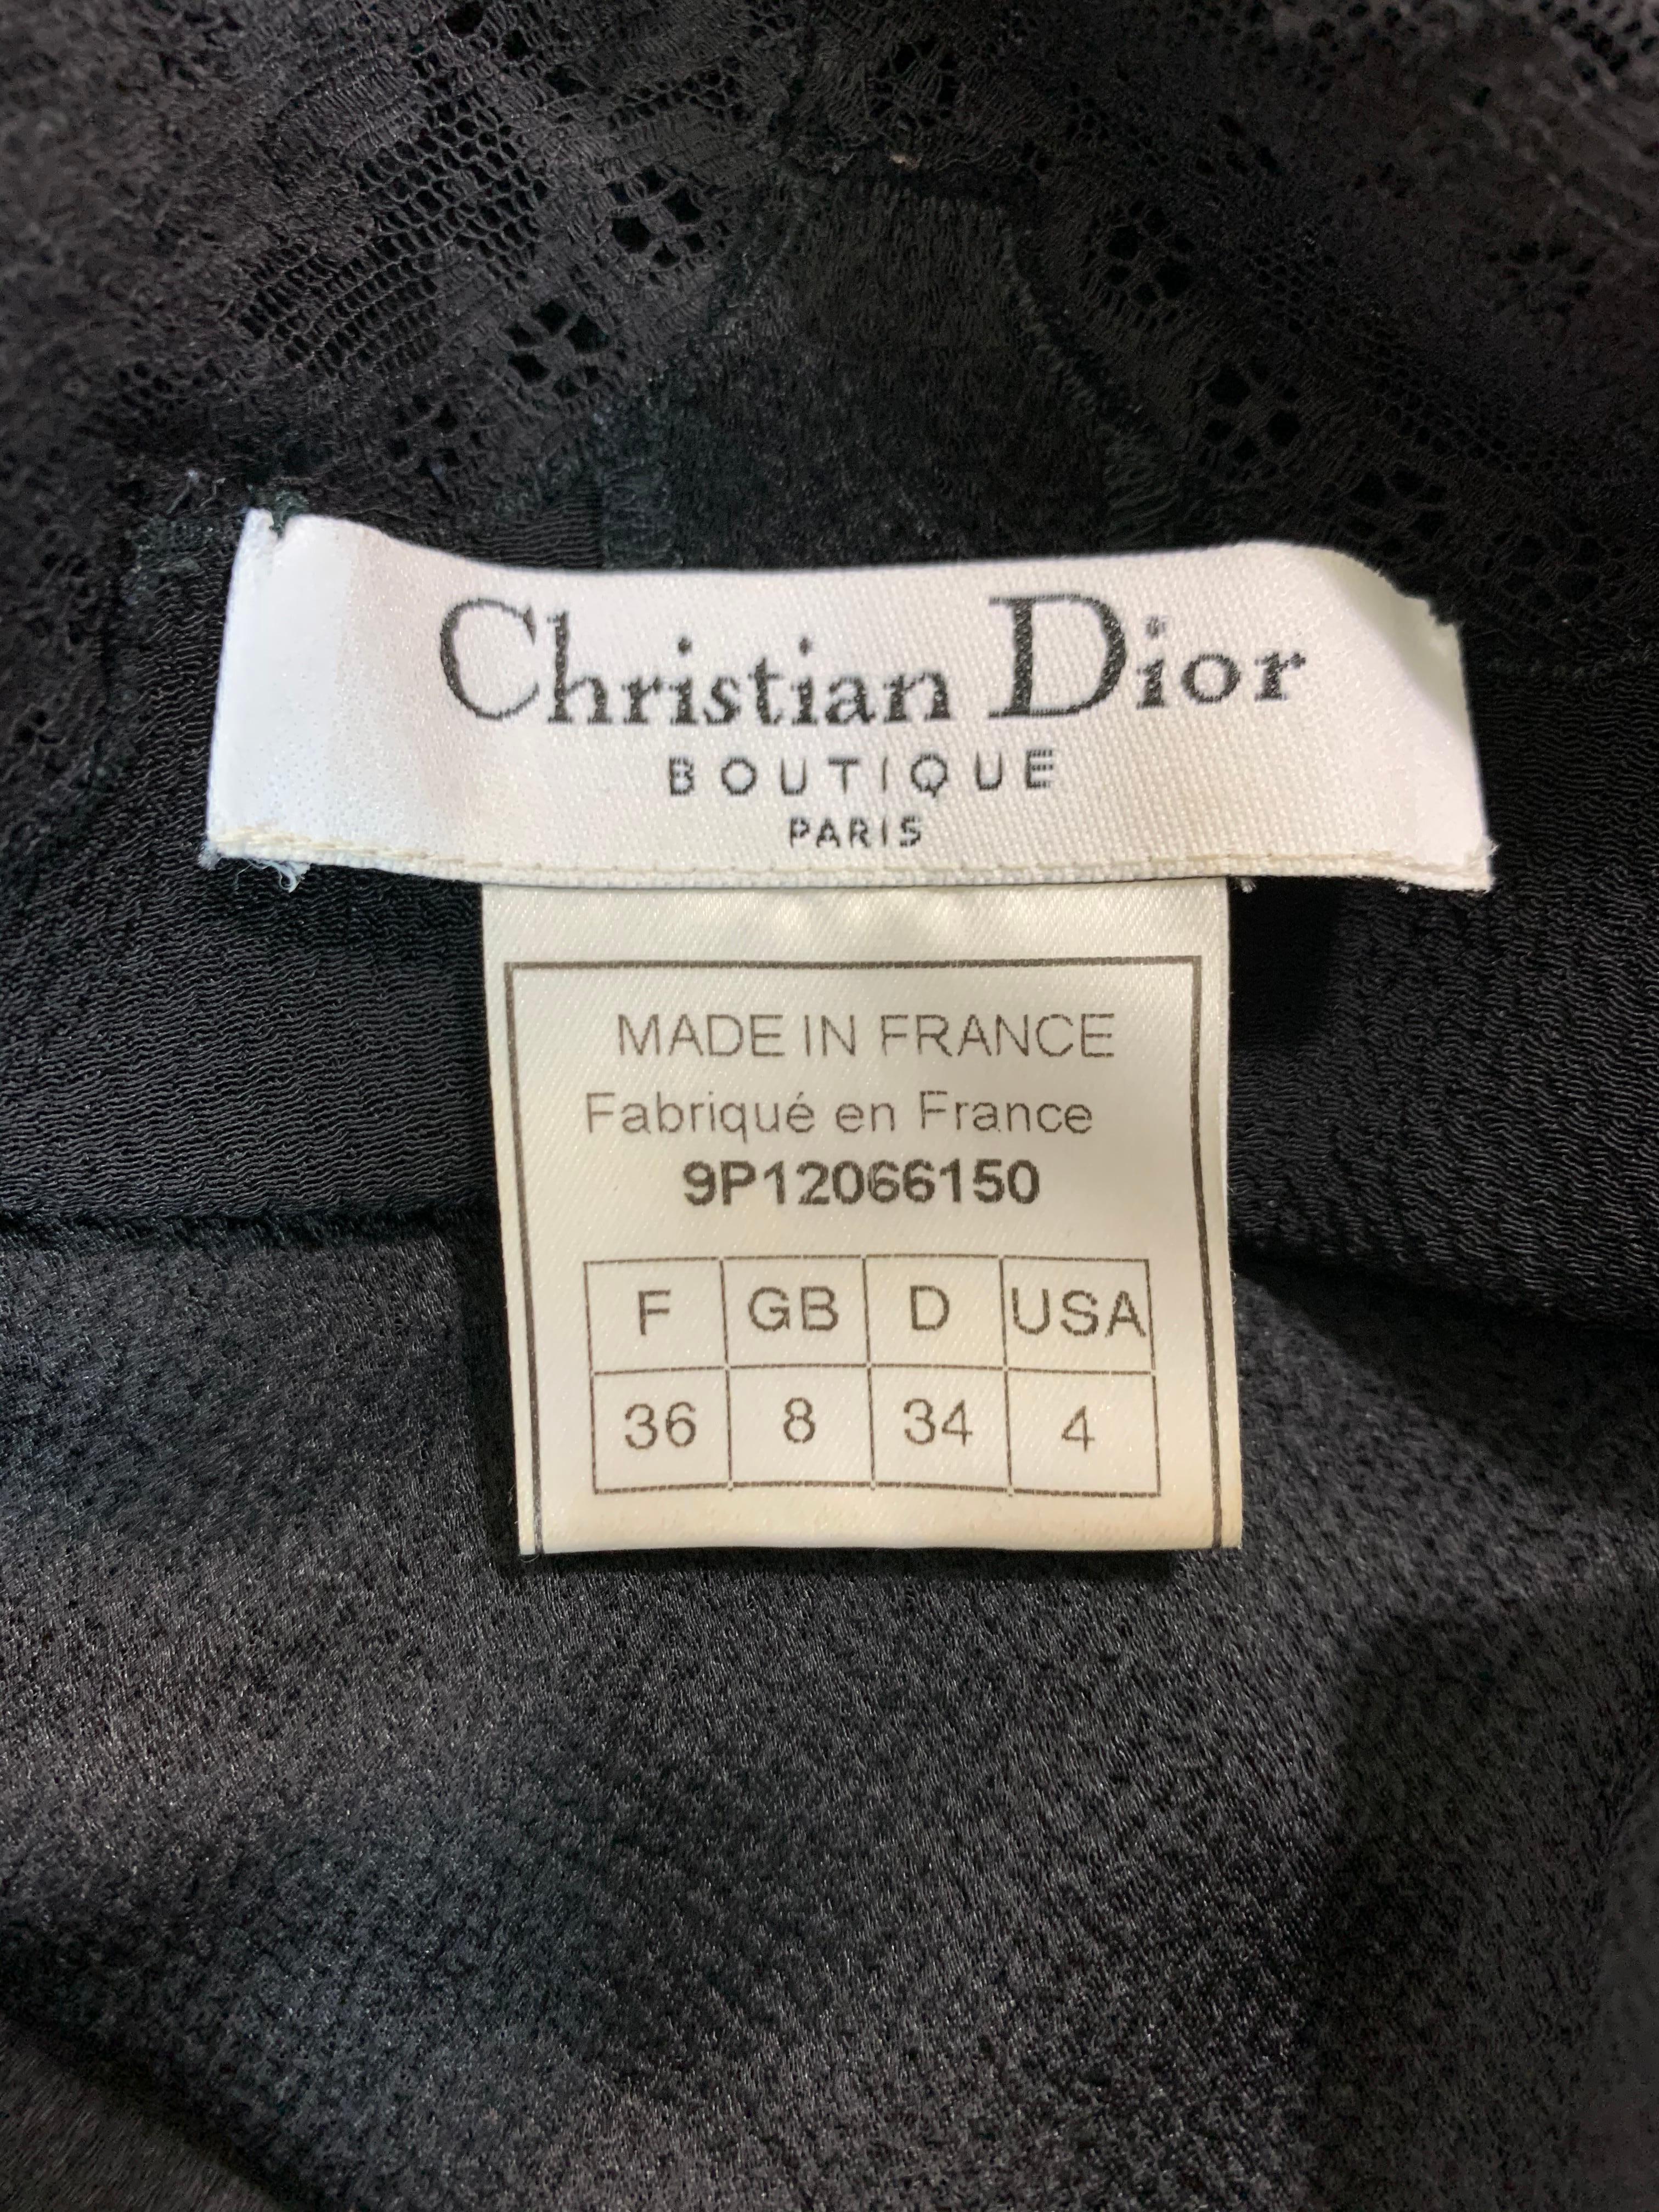 S/S 1999 Christian Dior John Galliano Sheer Black Lace Mermaid Maxi ...